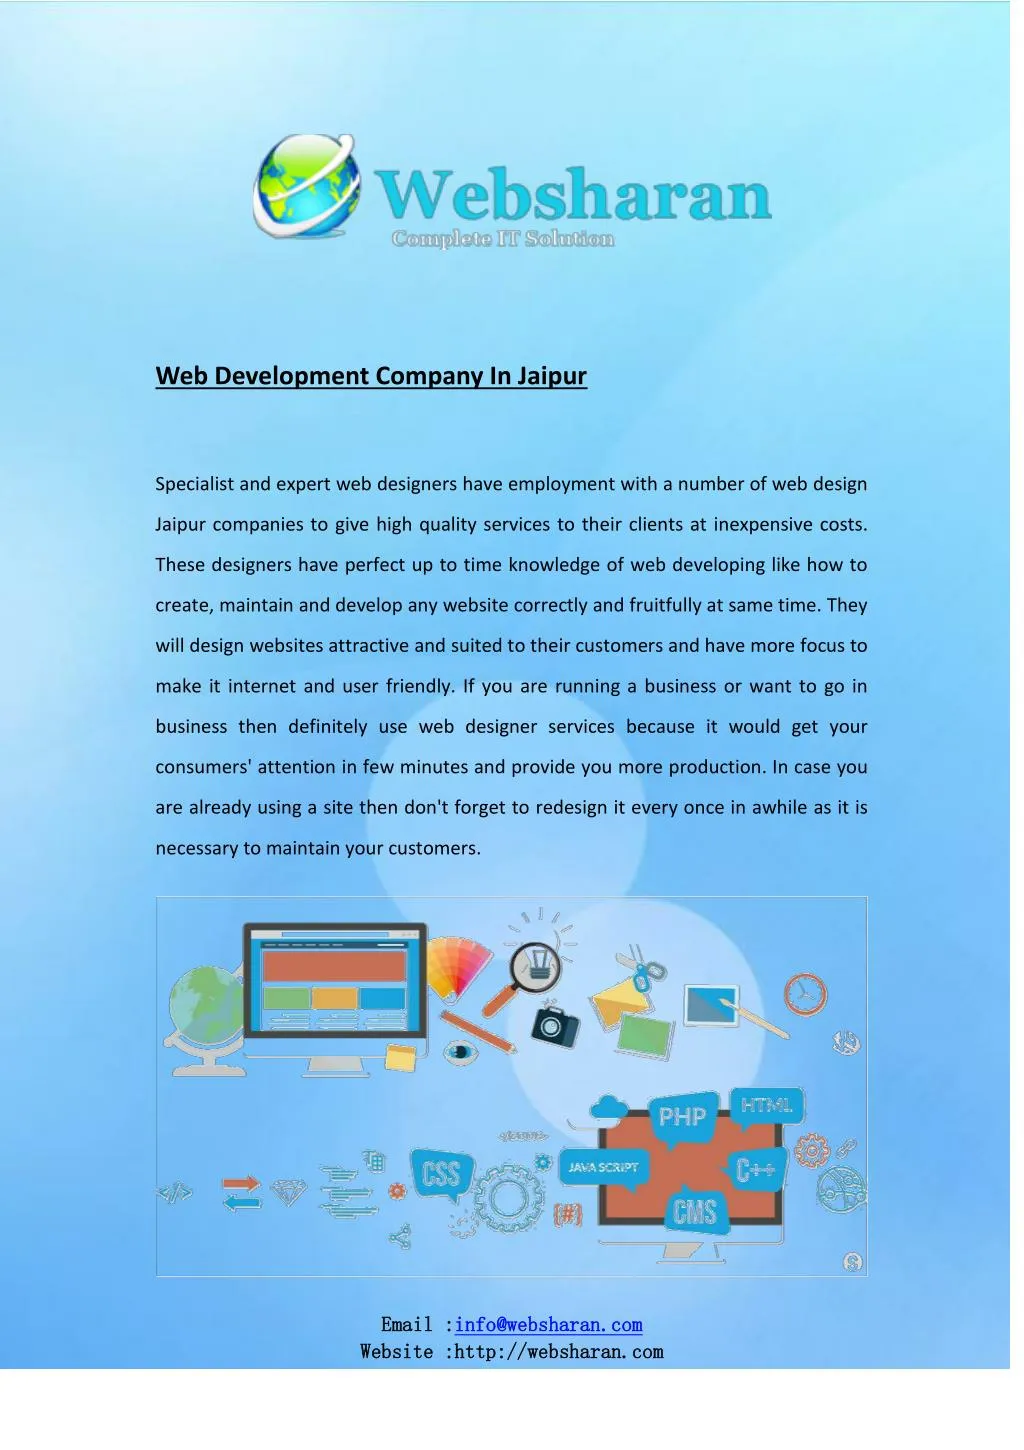 web development company in jaipur